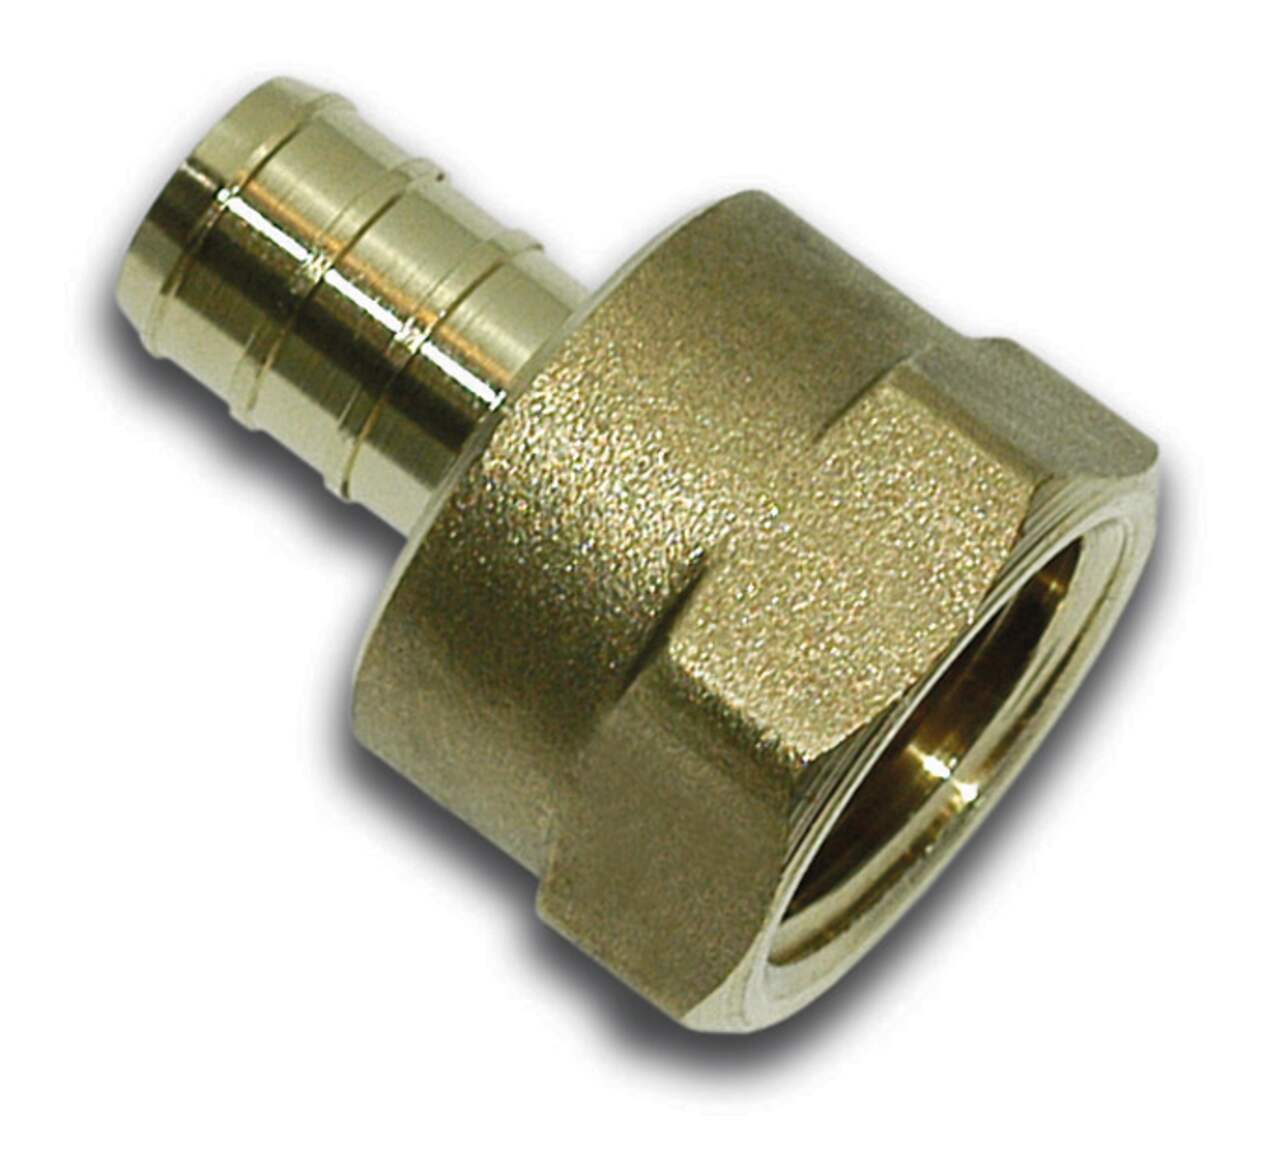 1 Male NPT x 3/4 PEX Brass Adapter (Lead Free) 